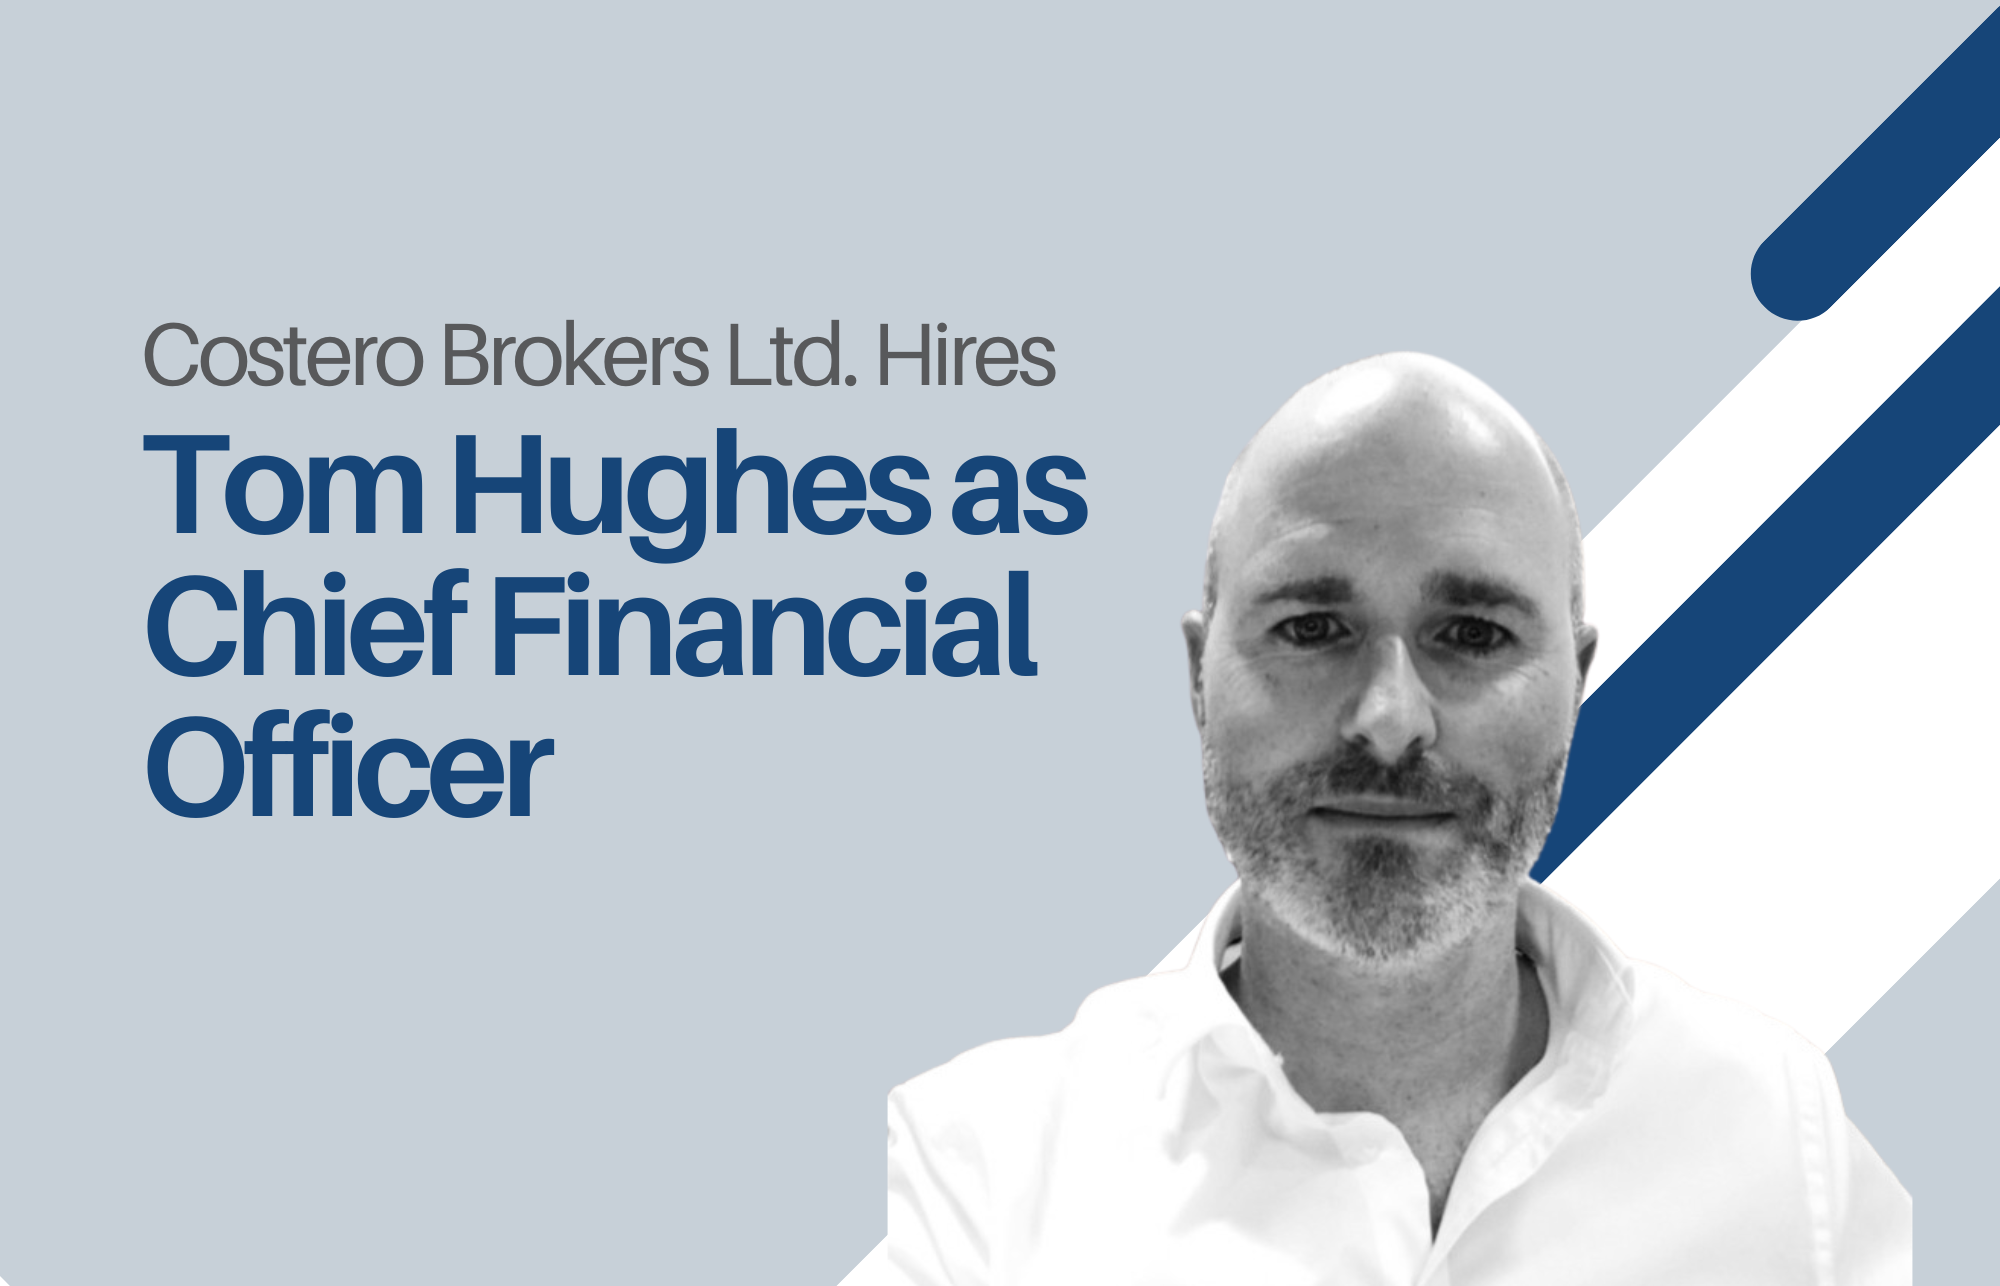 Tom Hughes as Chief Financial Officer